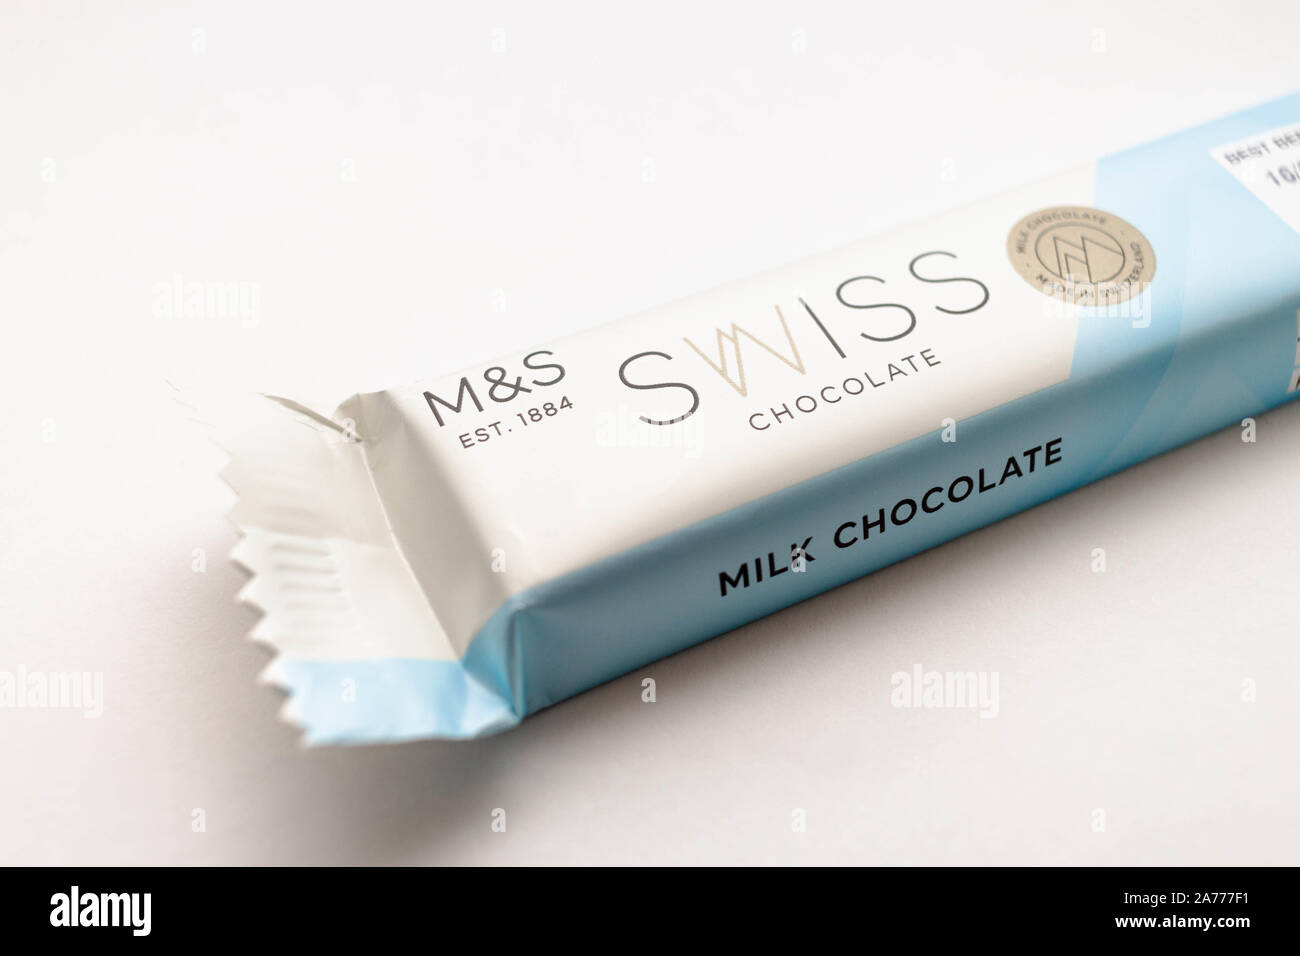 Marks & Spencer Food, The Milk Swiss Chocolate Stock Photo